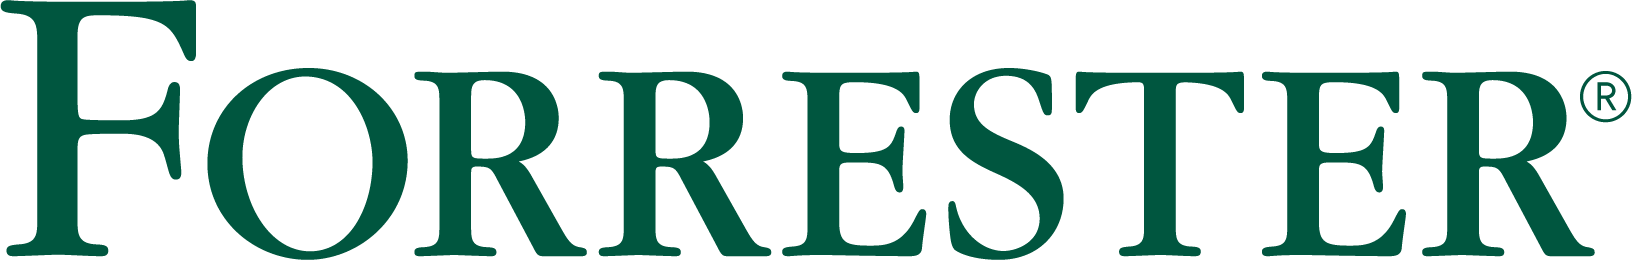 Logotipo de Forrester